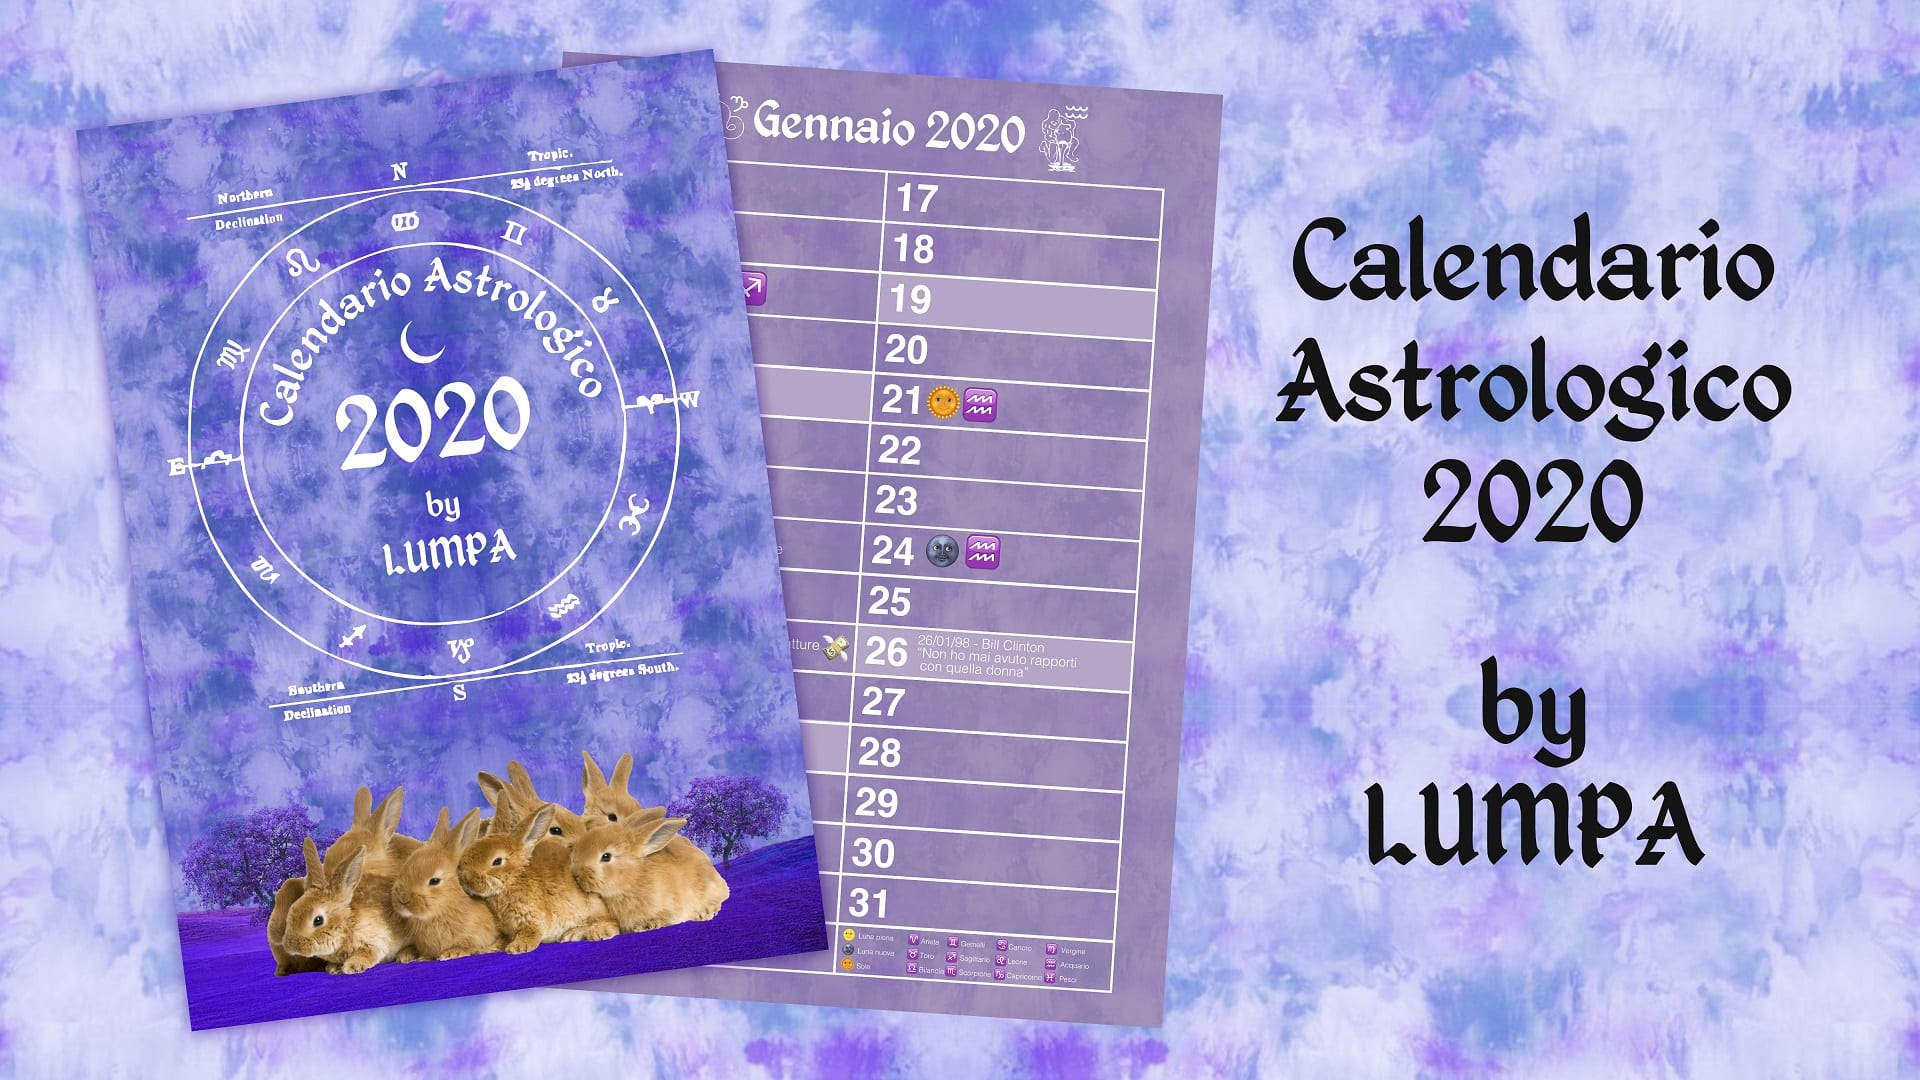 Calendario Astrologico 2020 by Lumpa